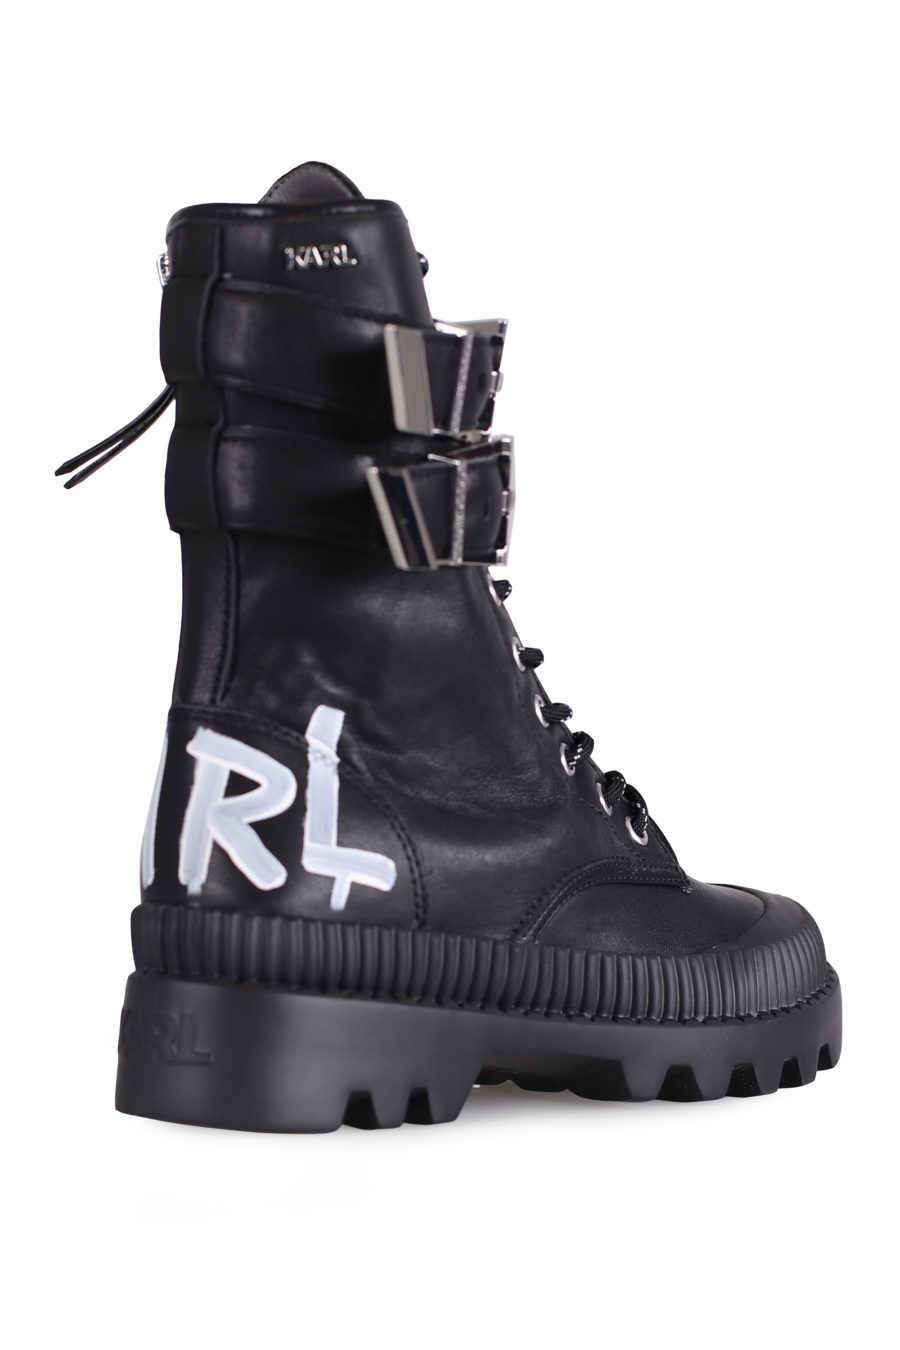 Trekka" boots in black with logo - IMG 0734